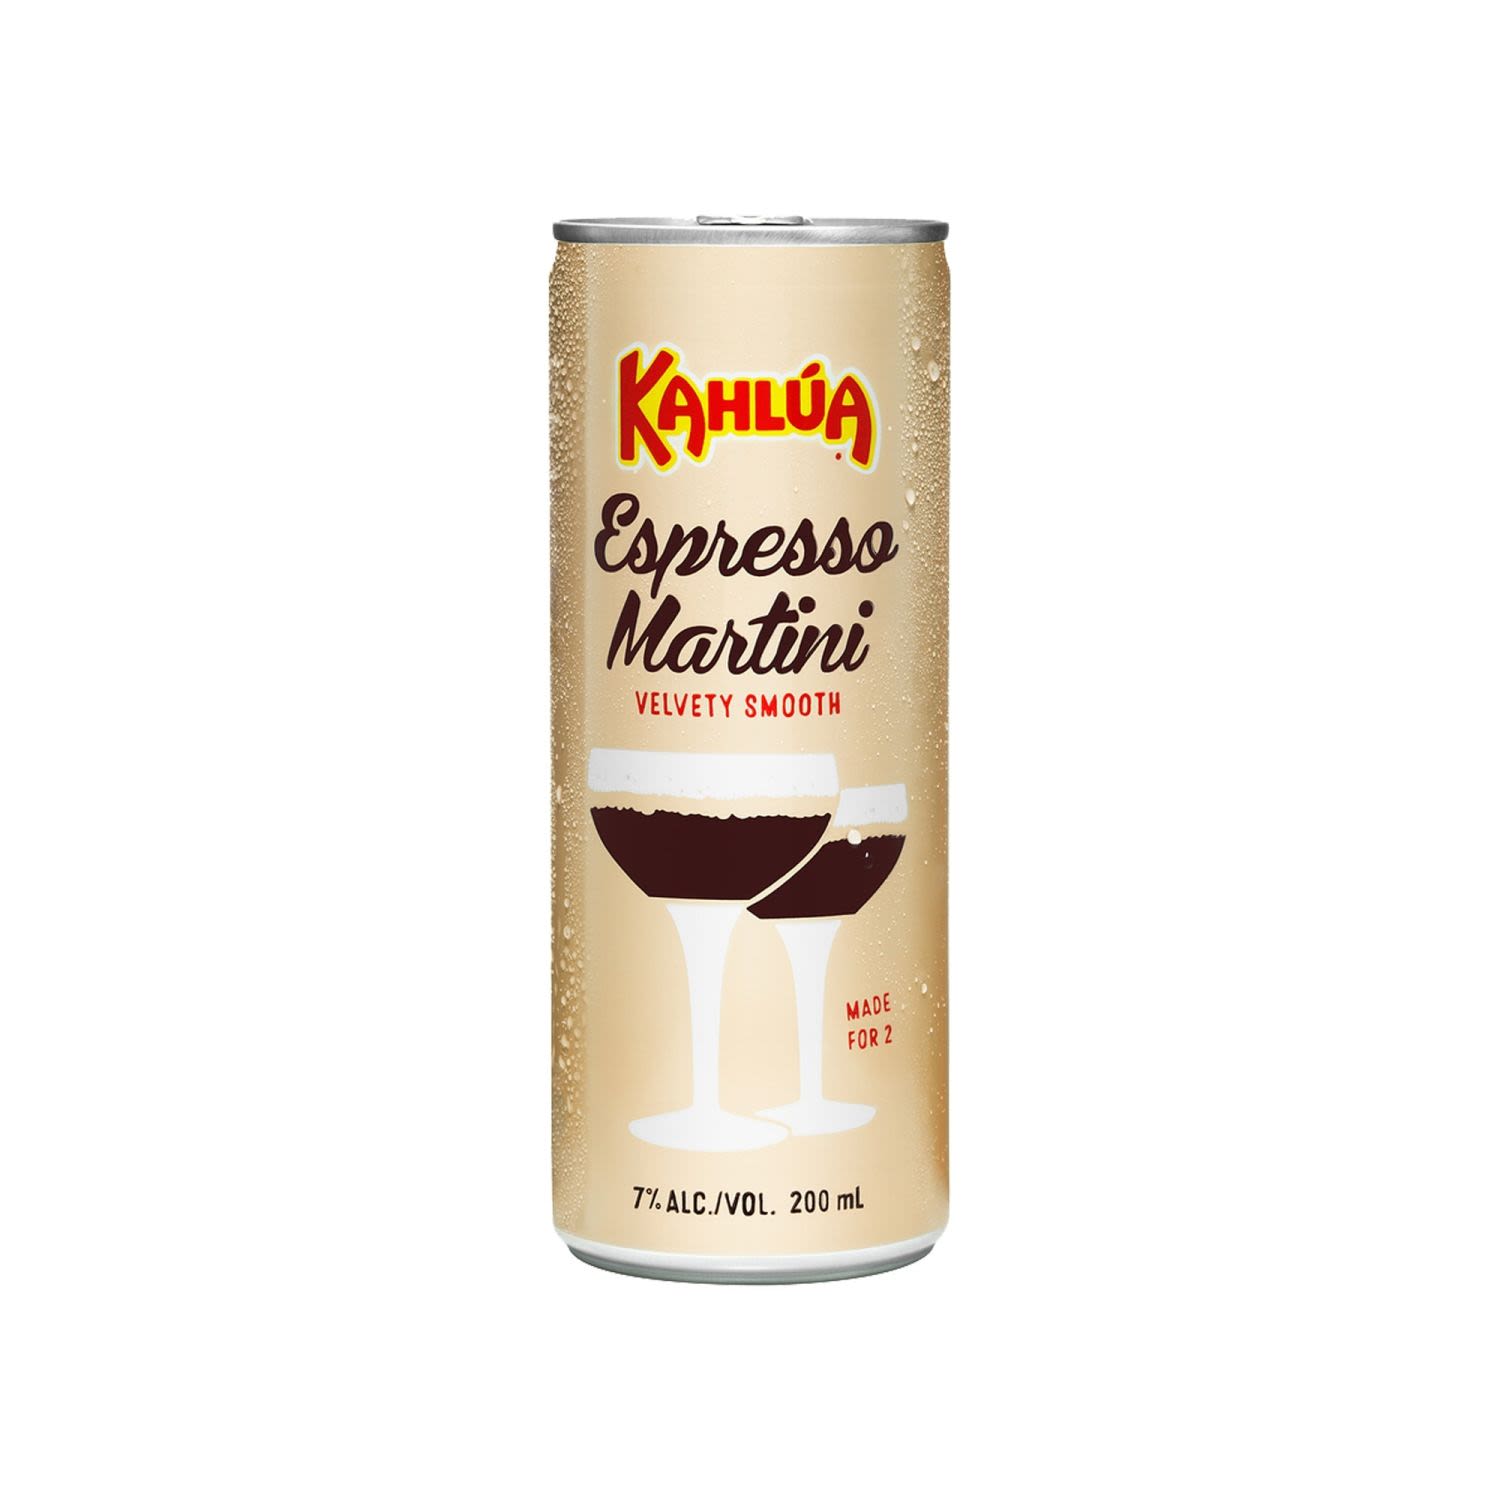 Kahlua Espresso Martini 200mL<br /> <br />Alcohol Volume: 7.00%<br /><br />Pack Format: Can<br /><br />Standard Drinks: 1.1</br /><br />Pack Type: Can<br />